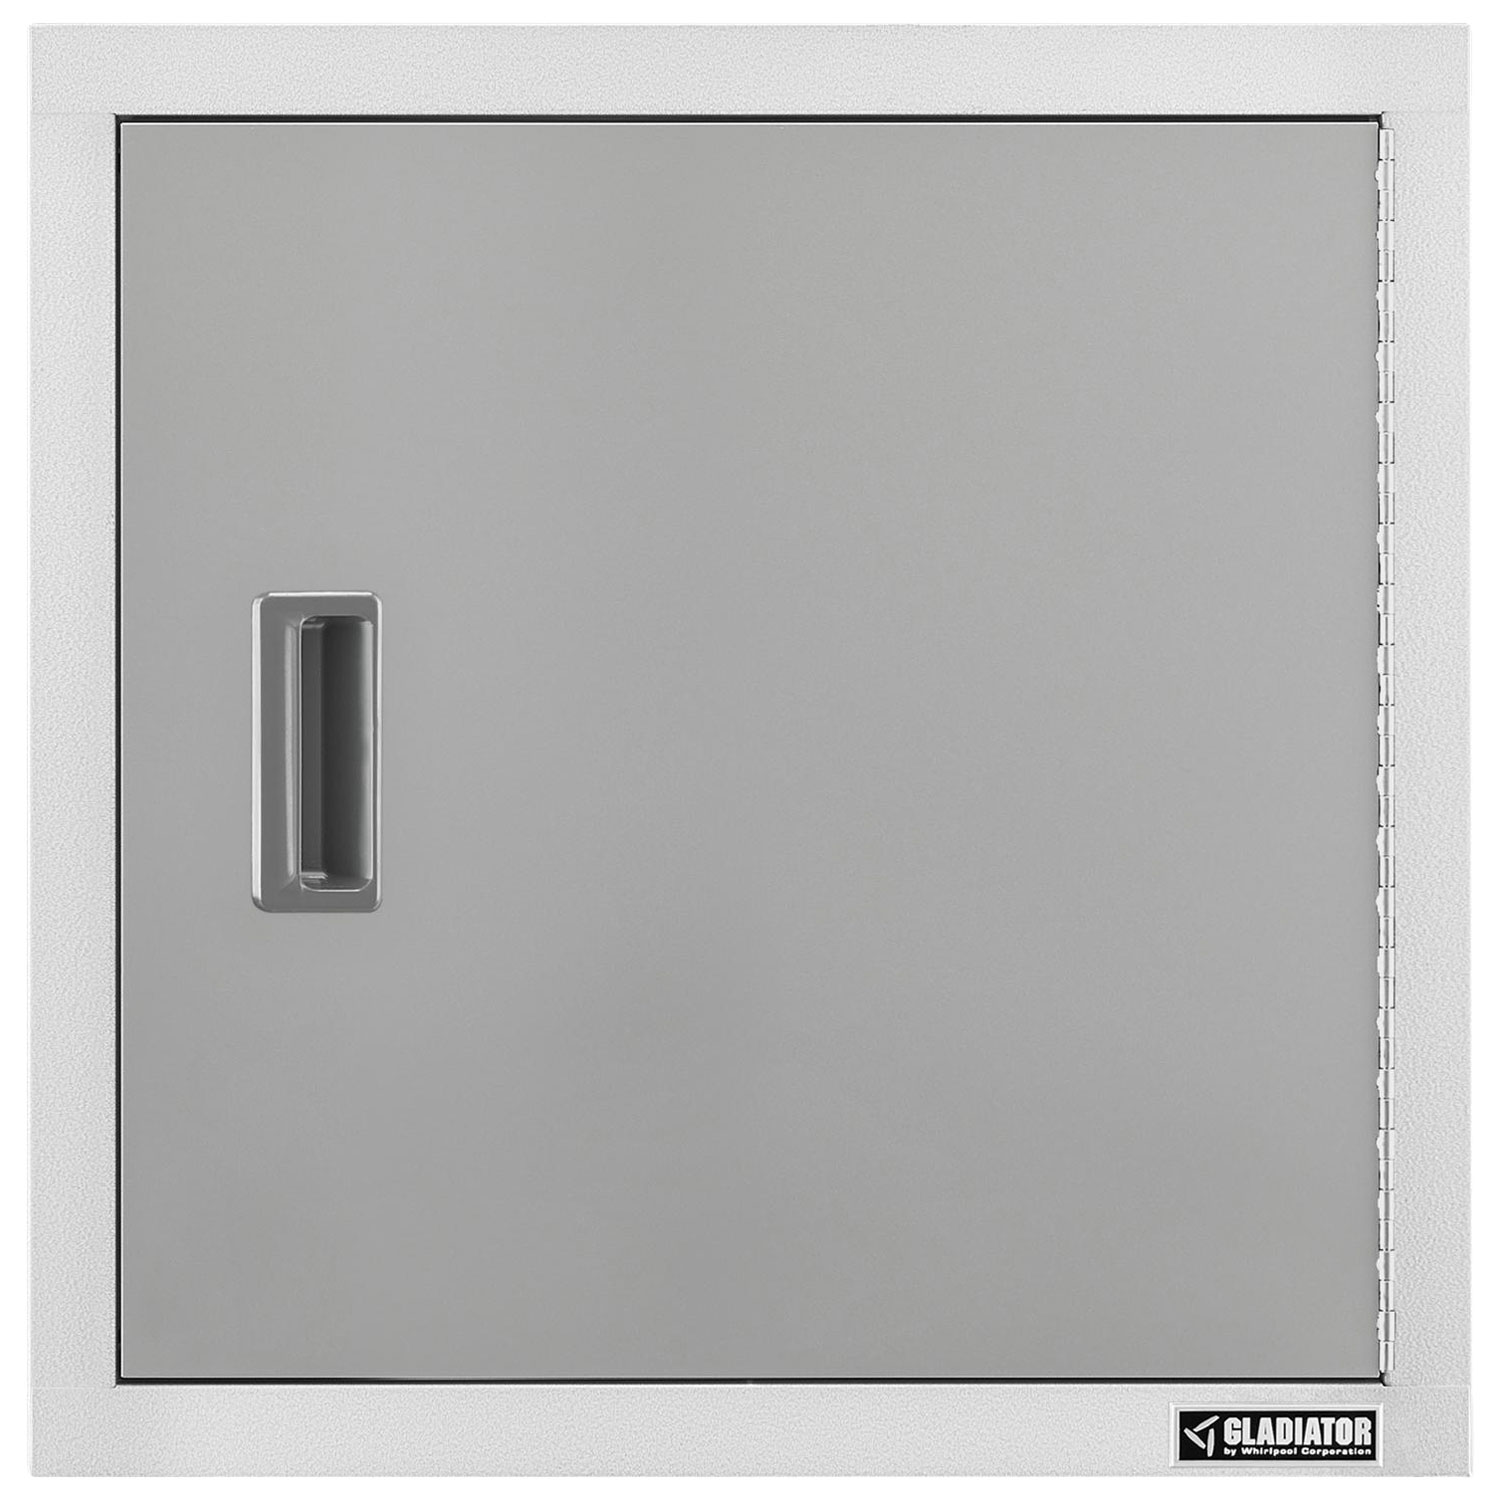 Gladiator 24 Premier Wall GearBox Steel Cabinet (GAWG241DKW) - Grey Slate